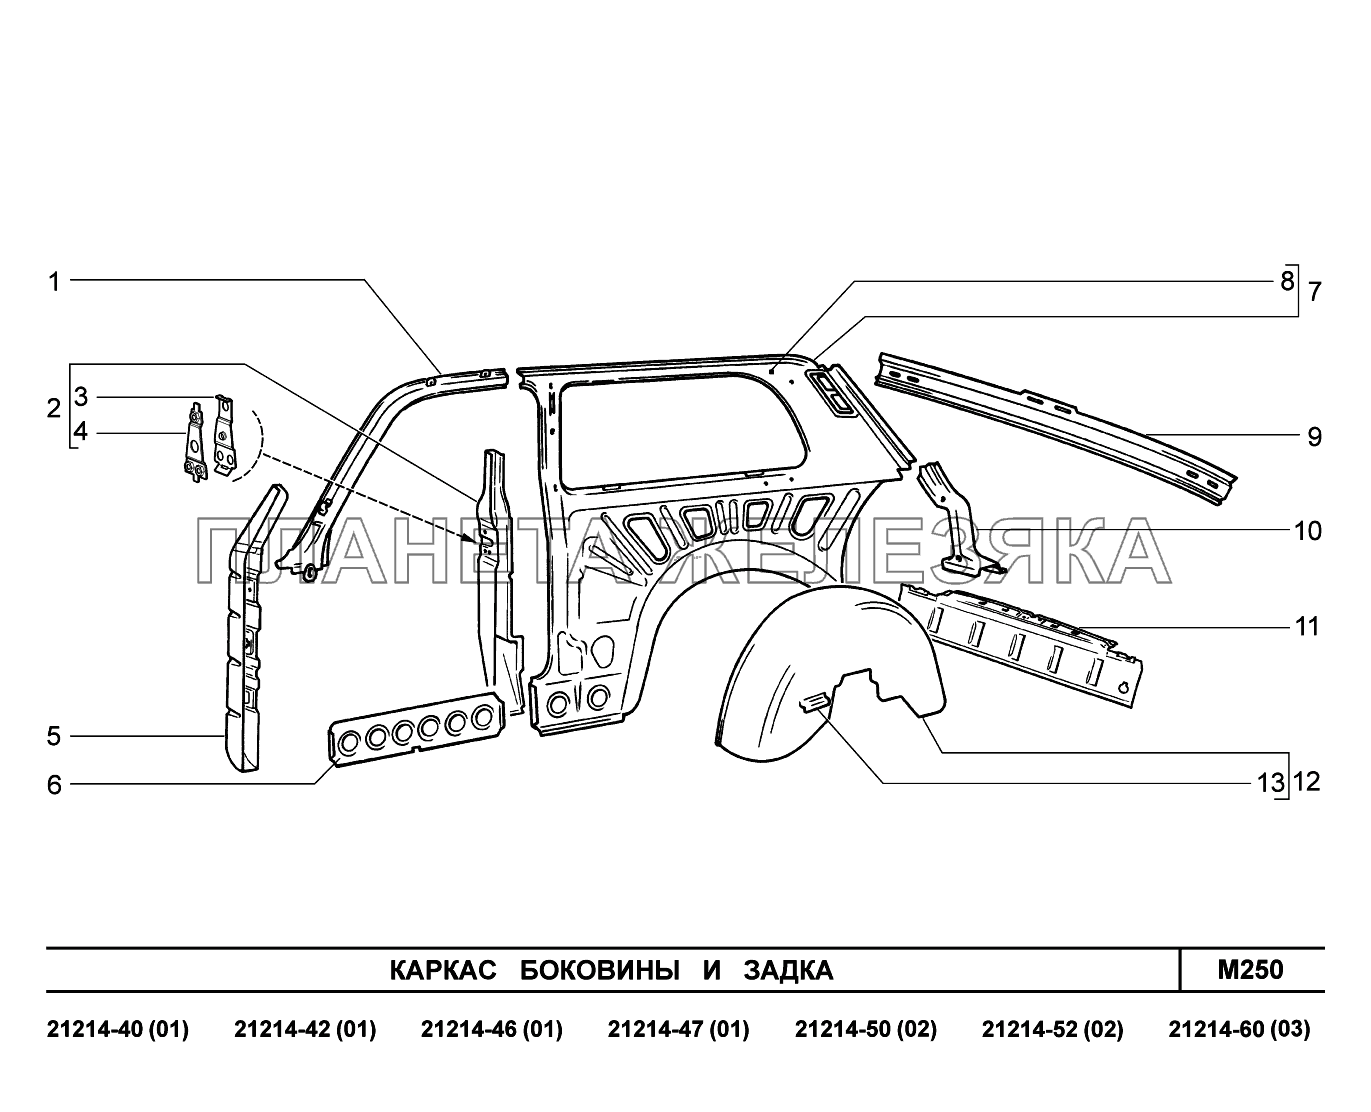 M250. Каркас боковины и задка Lada 4x4 Urban